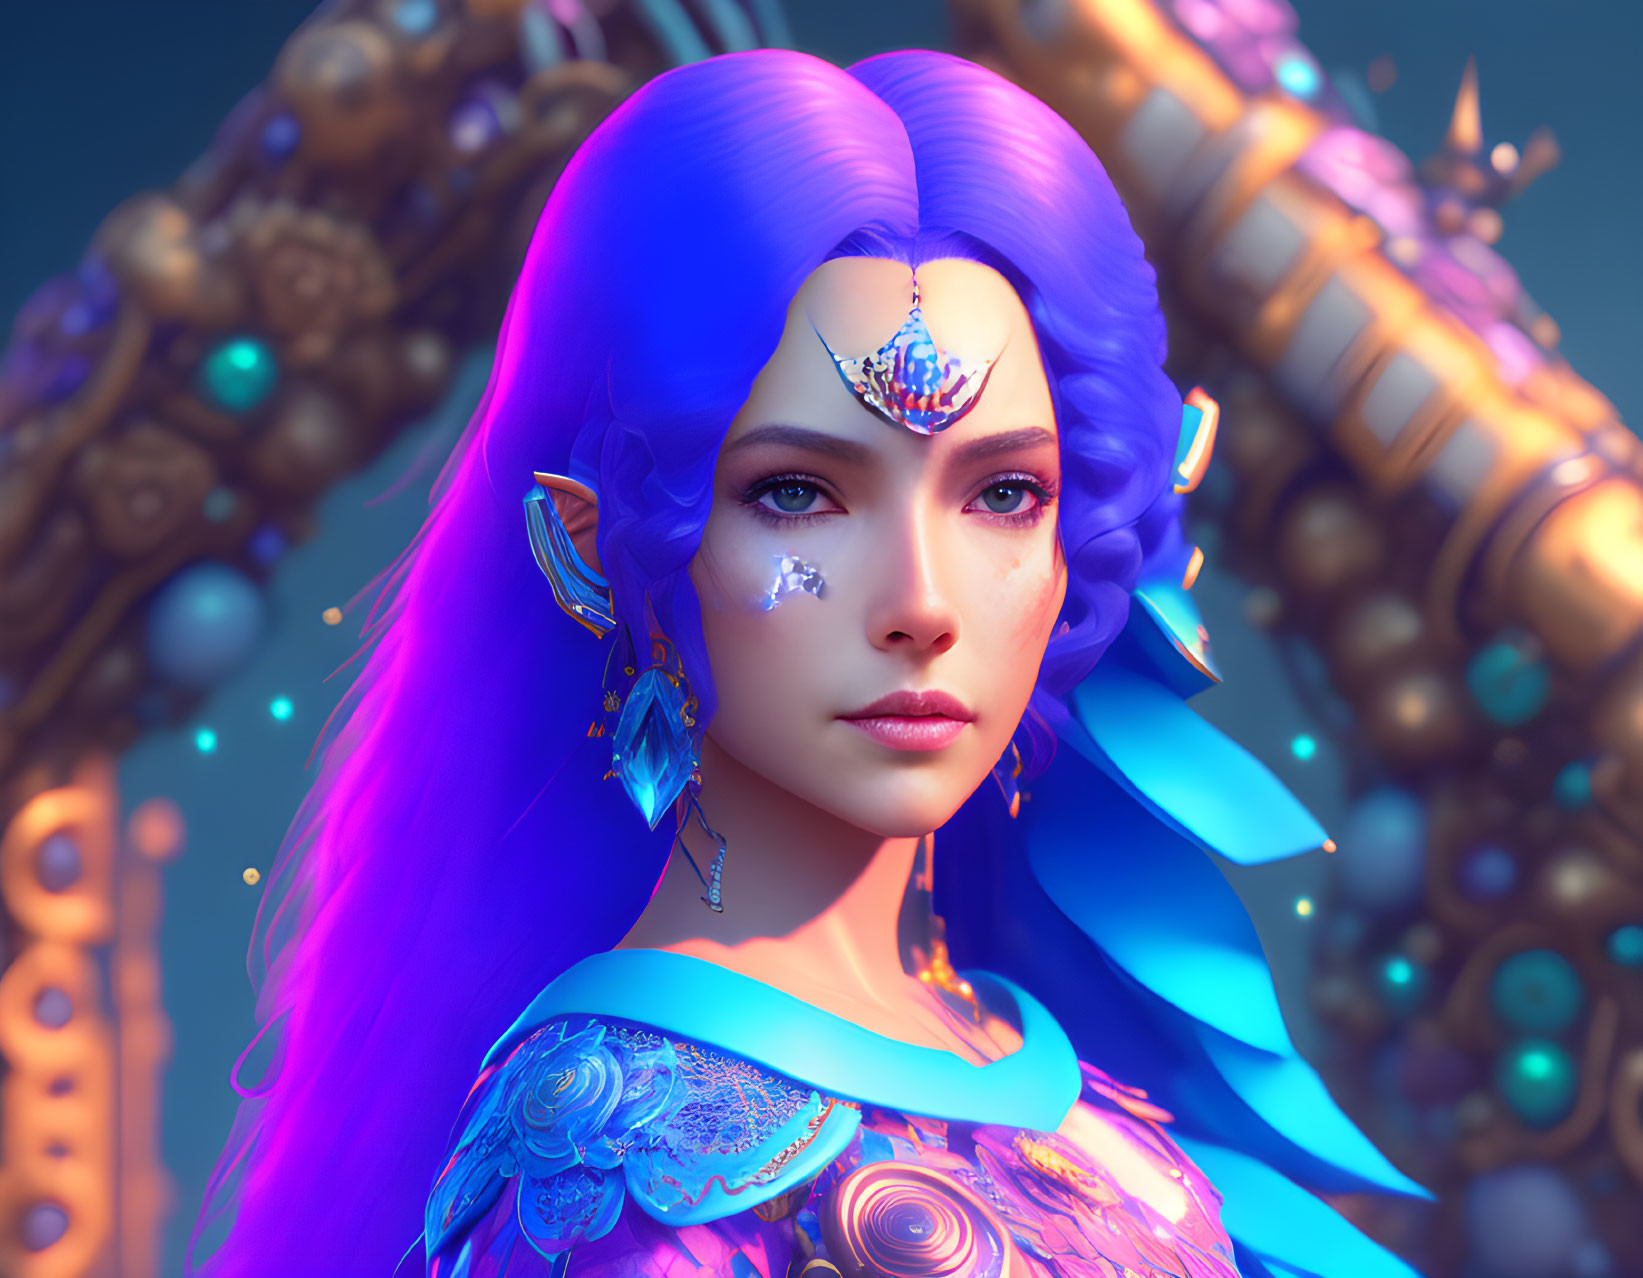 Digital artwork: Woman with vibrant blue hair, golden headdress & fantasy costume with mechanical details